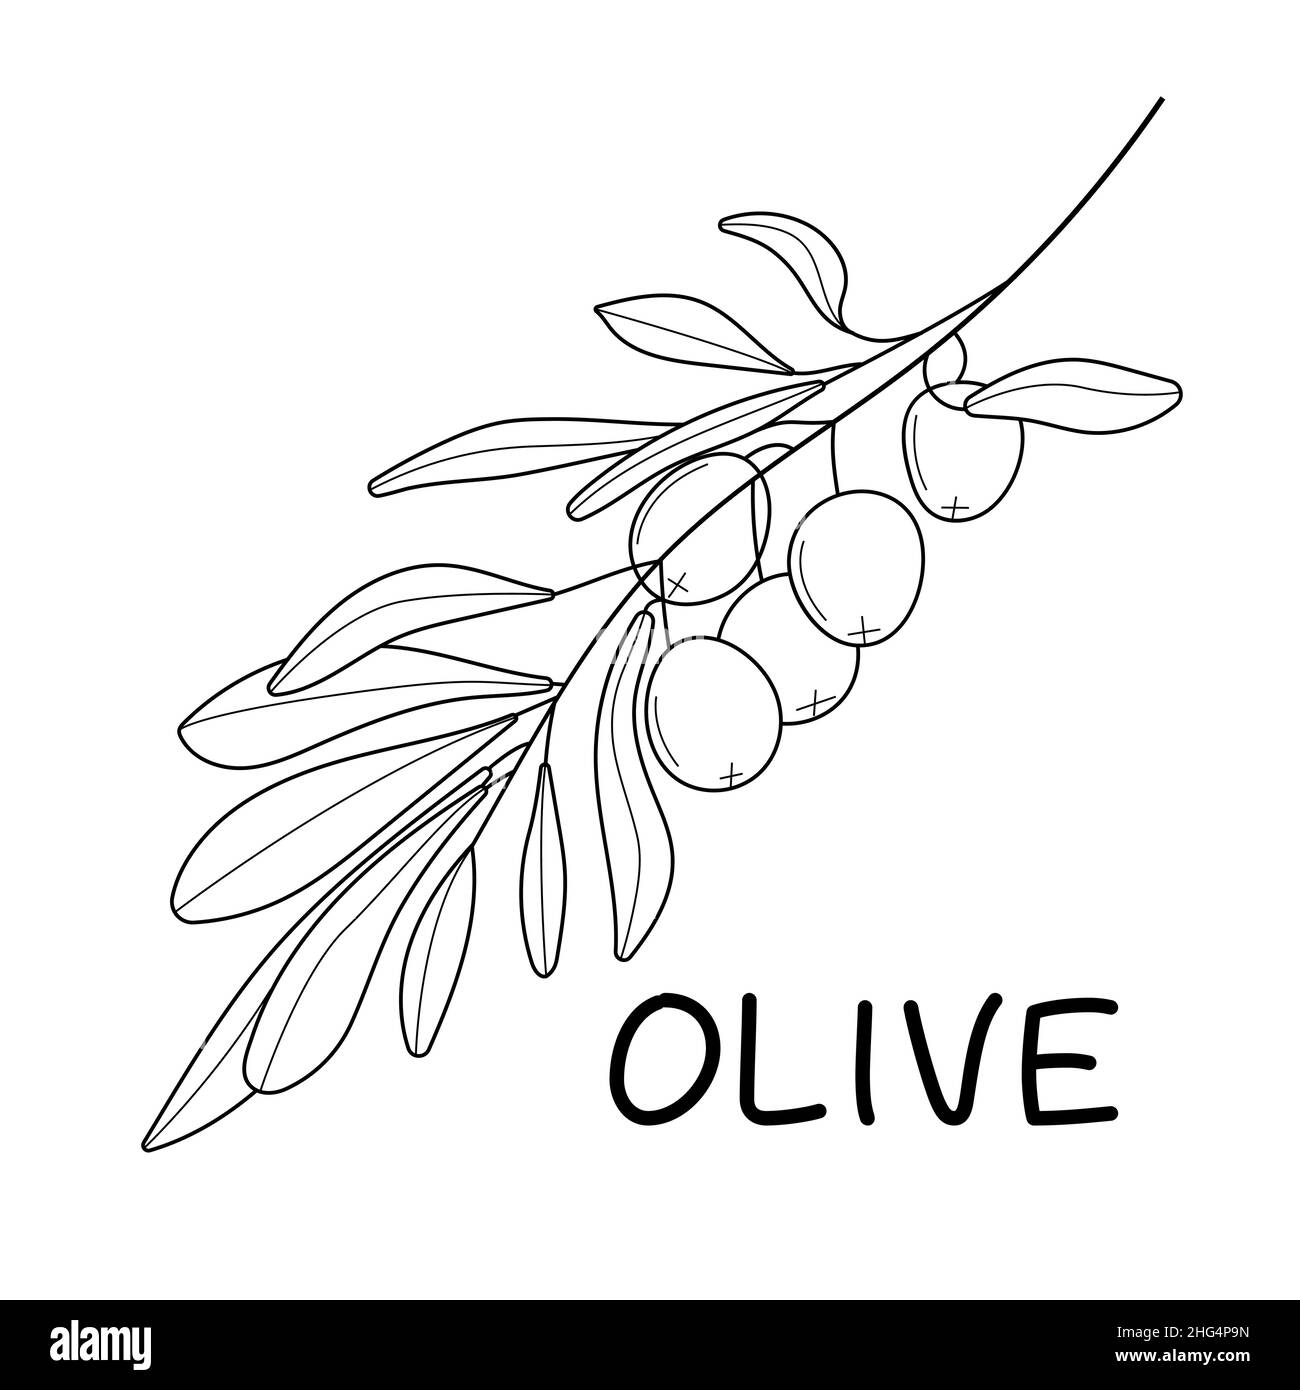 Sketch olive tree branches stock illustration Illustration of hand   39849051